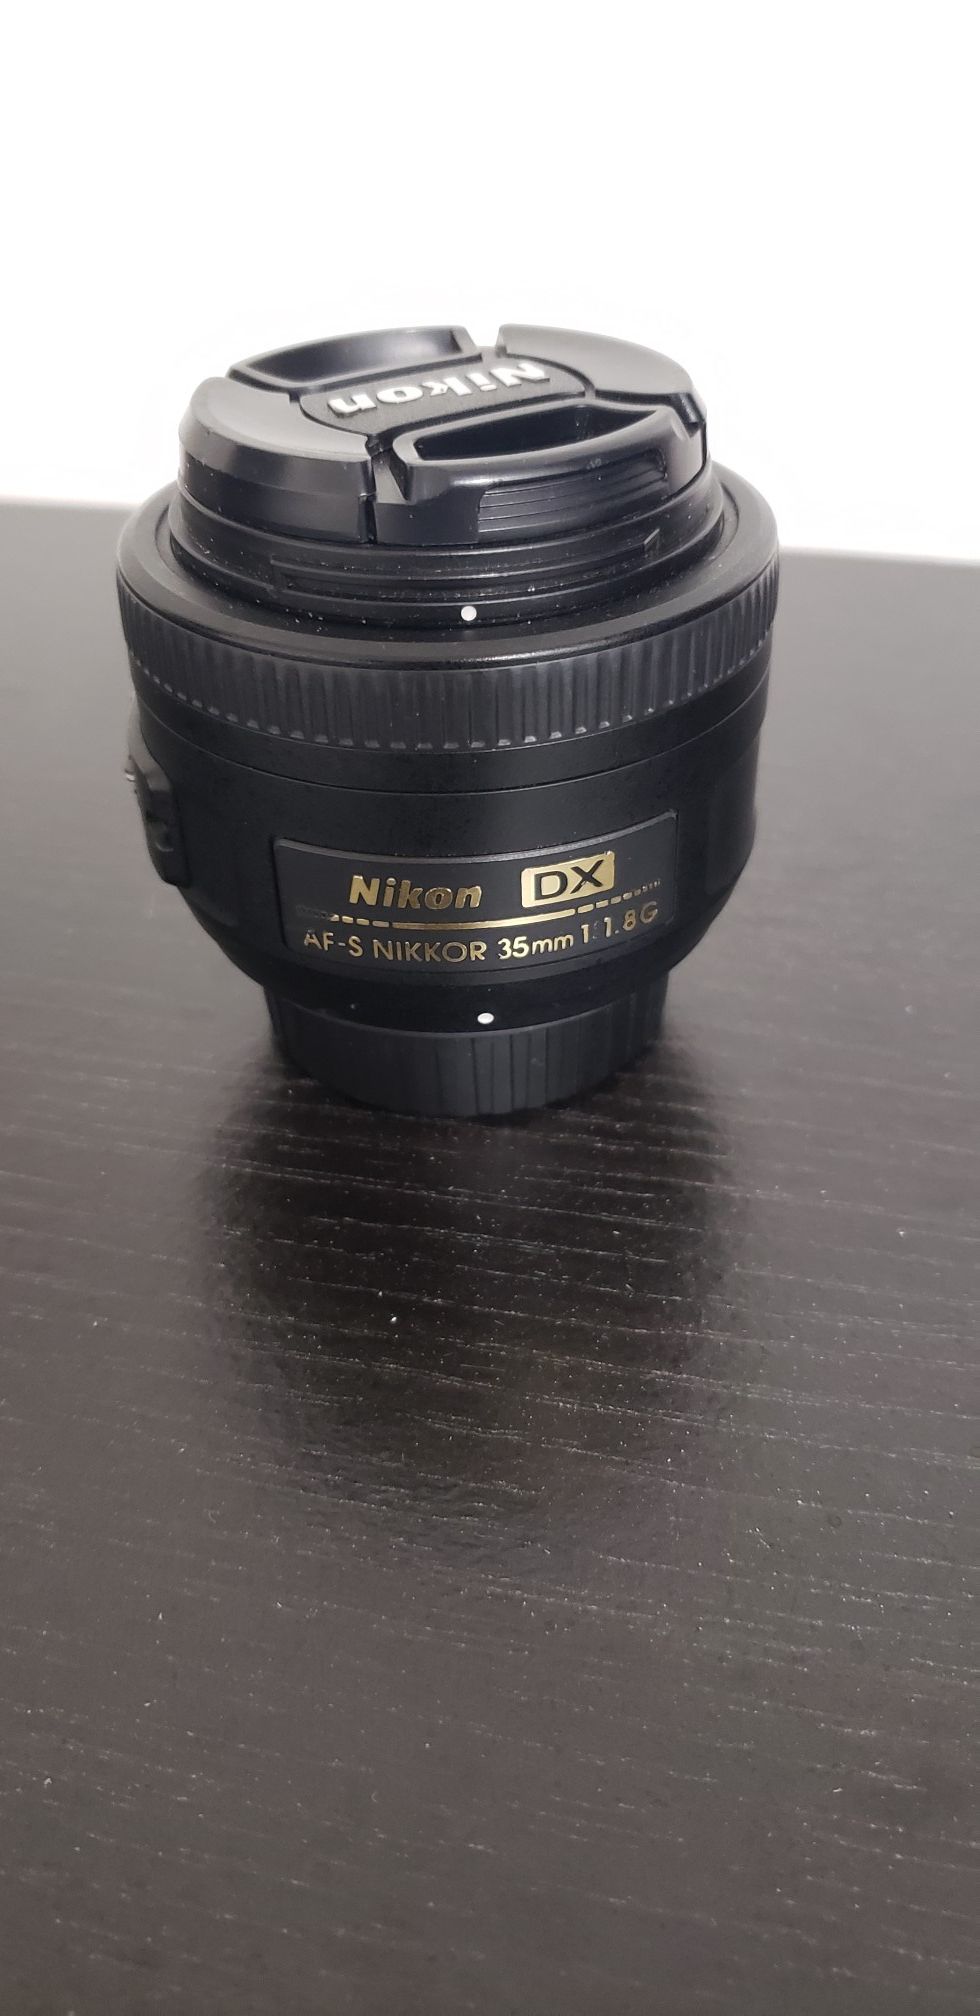 Nikon nikkor 35mm f1.8